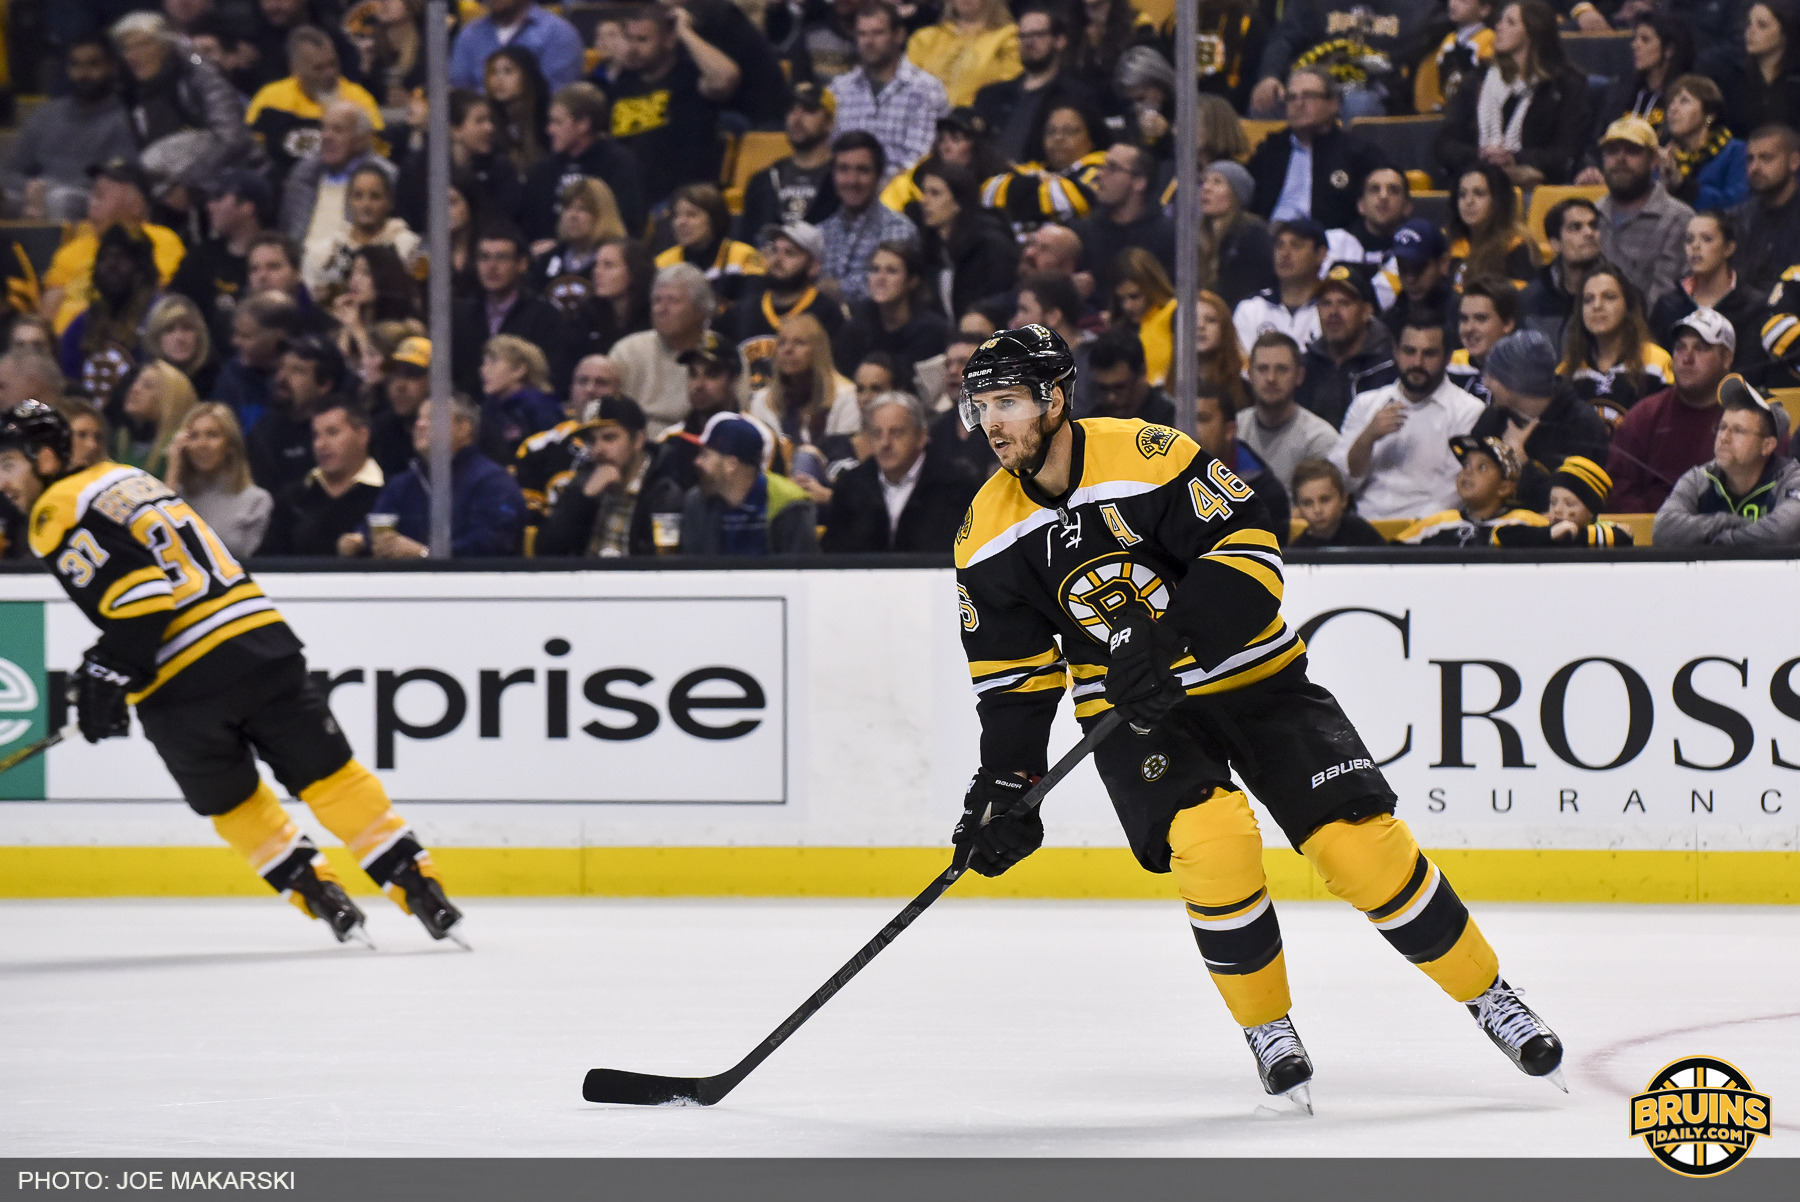 Bruins at Coyotes, David Krejci, NHL Leading scorers